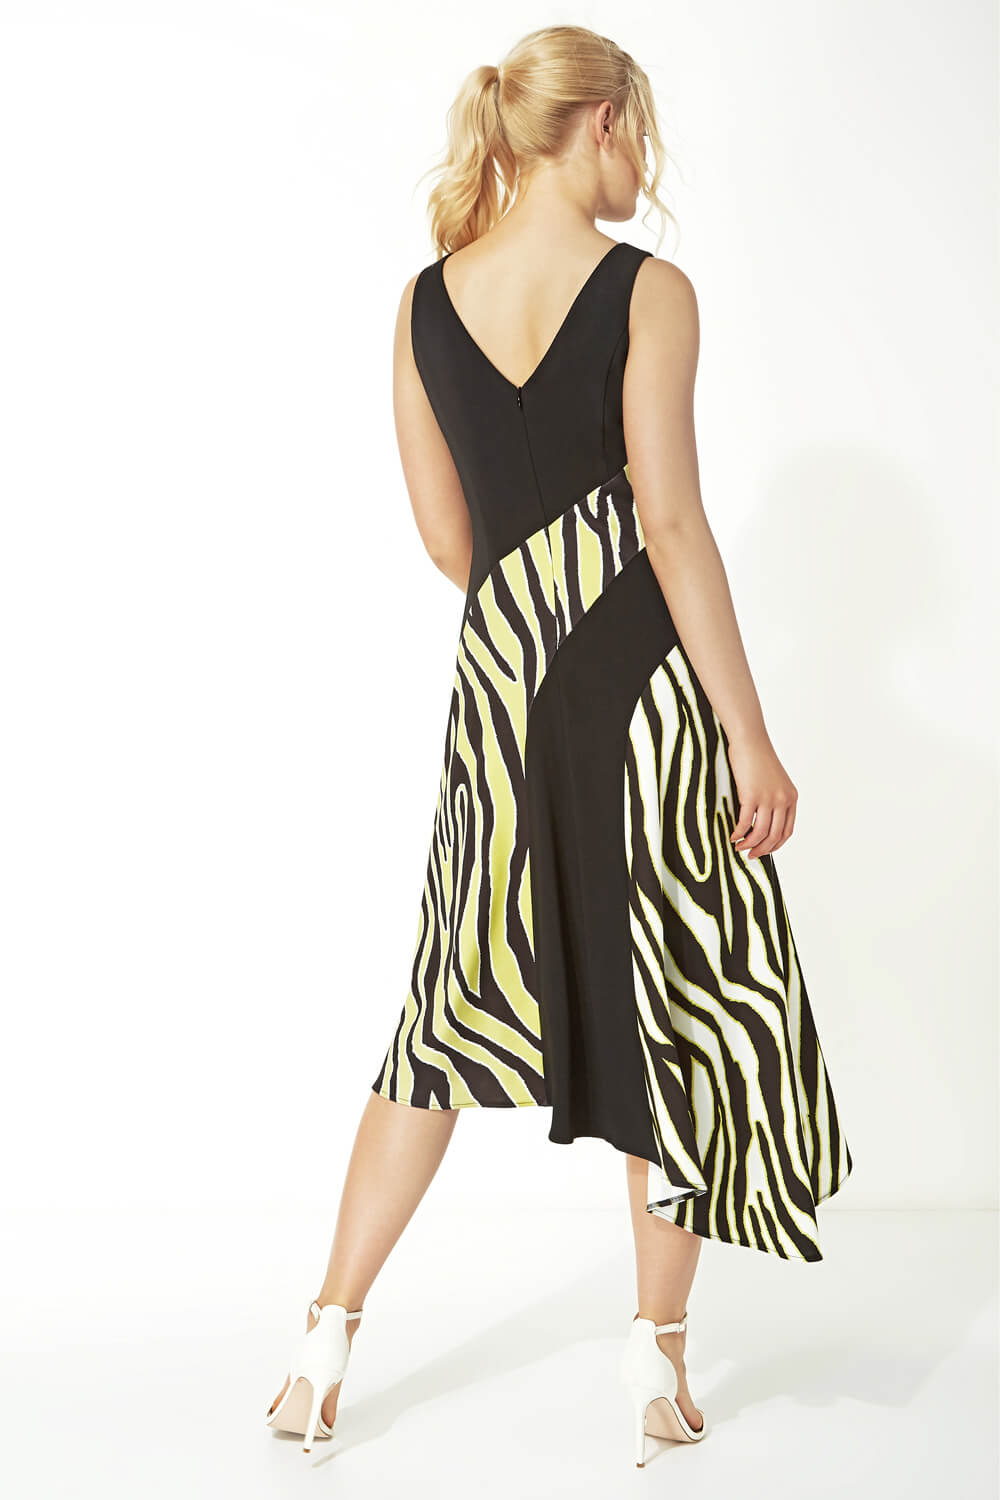 Black Zebra Print Block Asymmetric Dress, Image 3 of 4